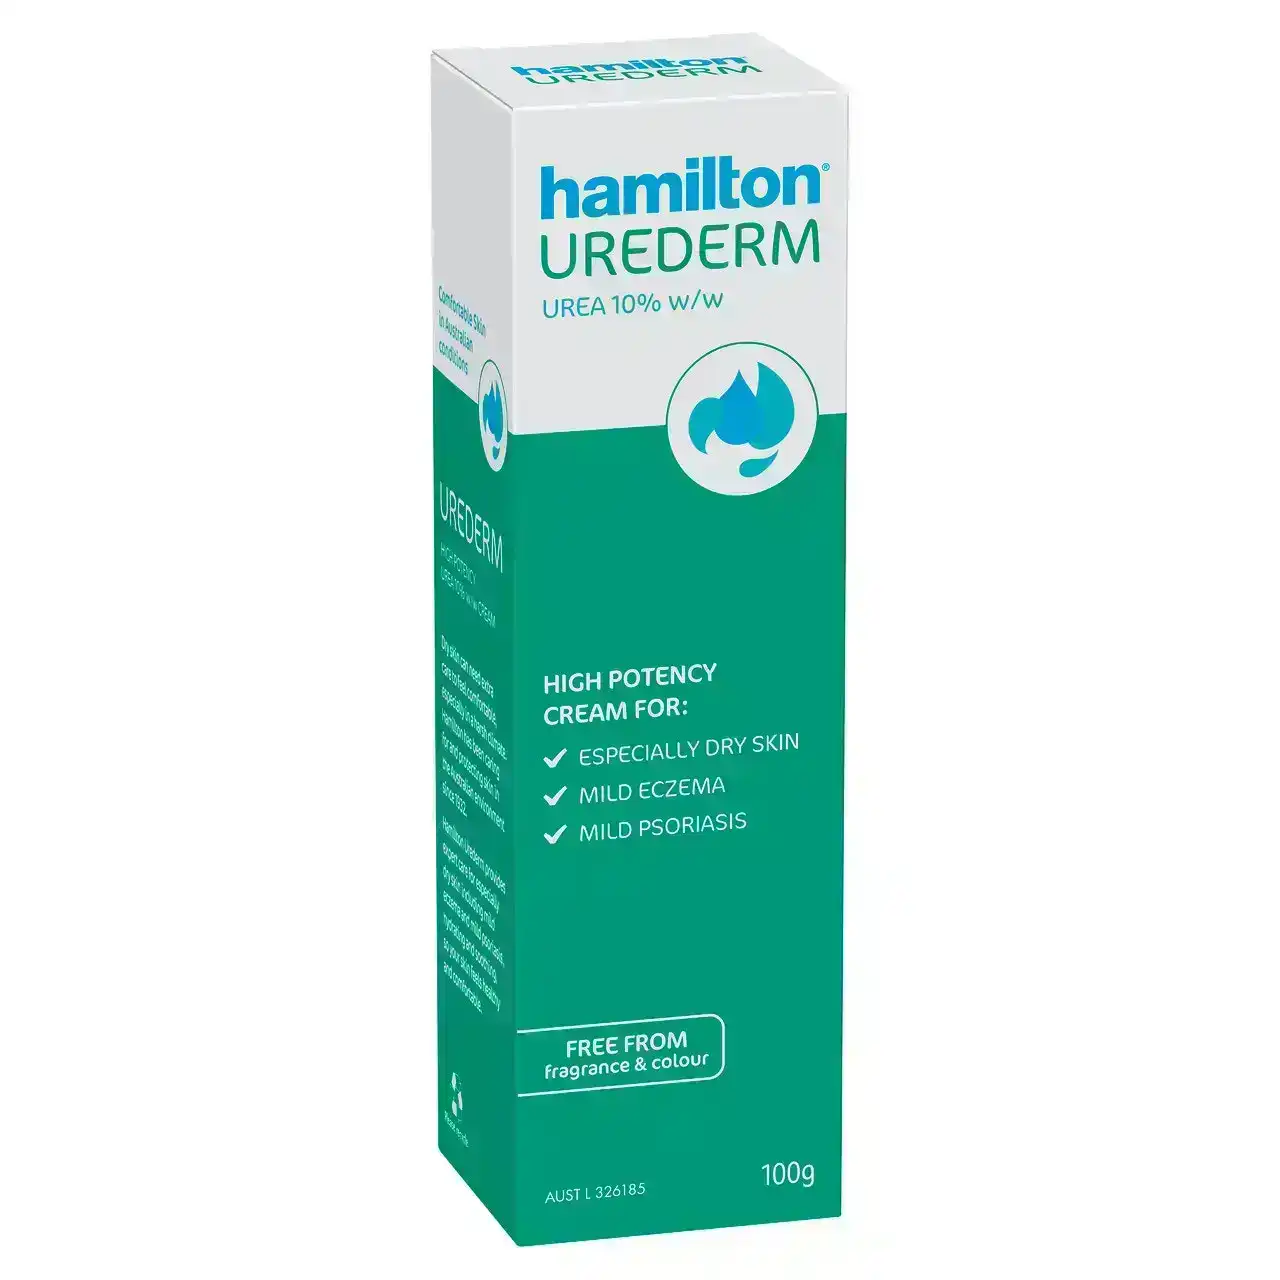 Hamilton(R) Urederm Cream 100gm